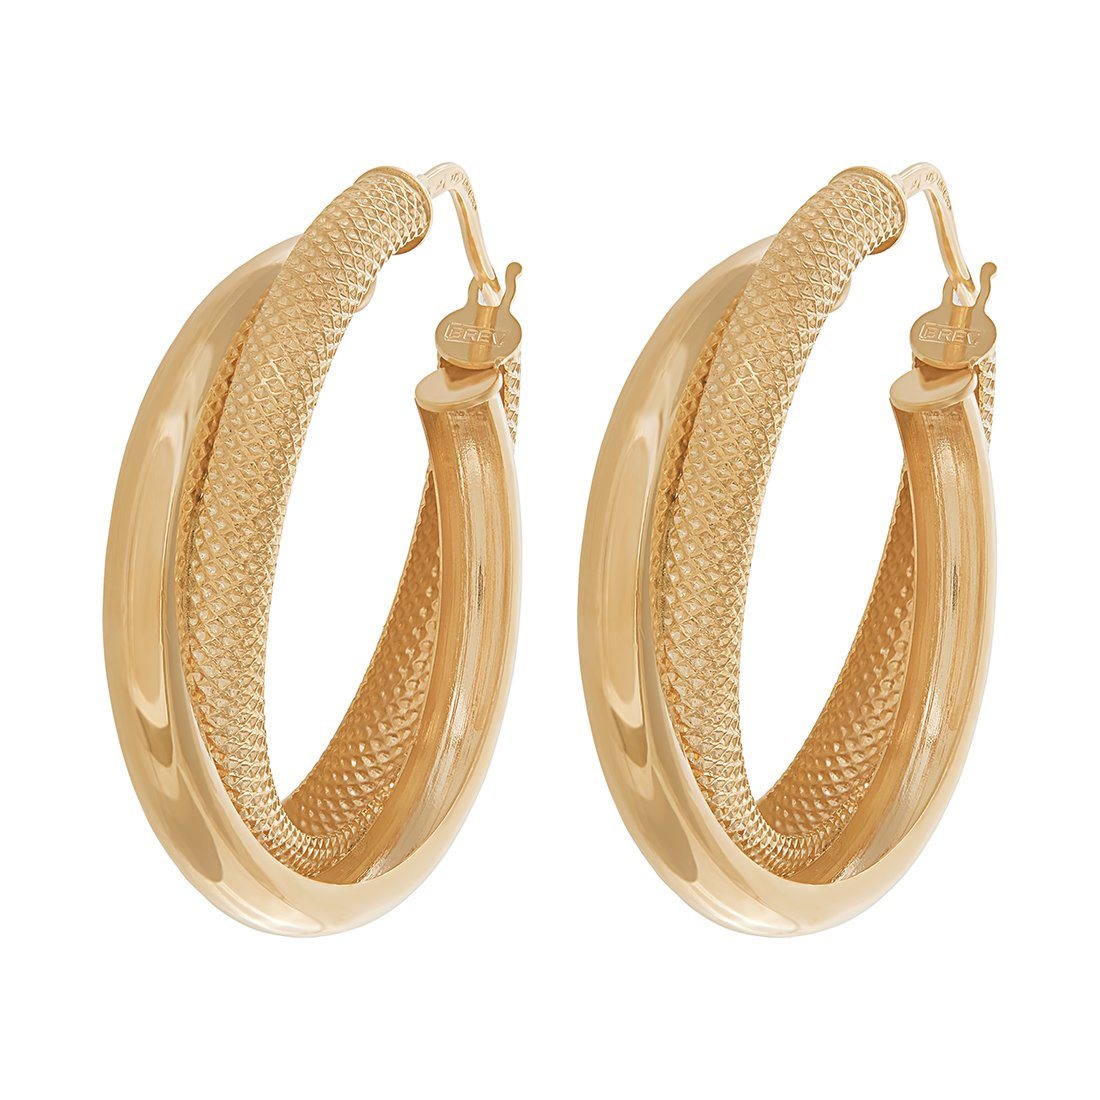 9ct Yellow Gold Double Hoop Earrings Earrings Bevilles 